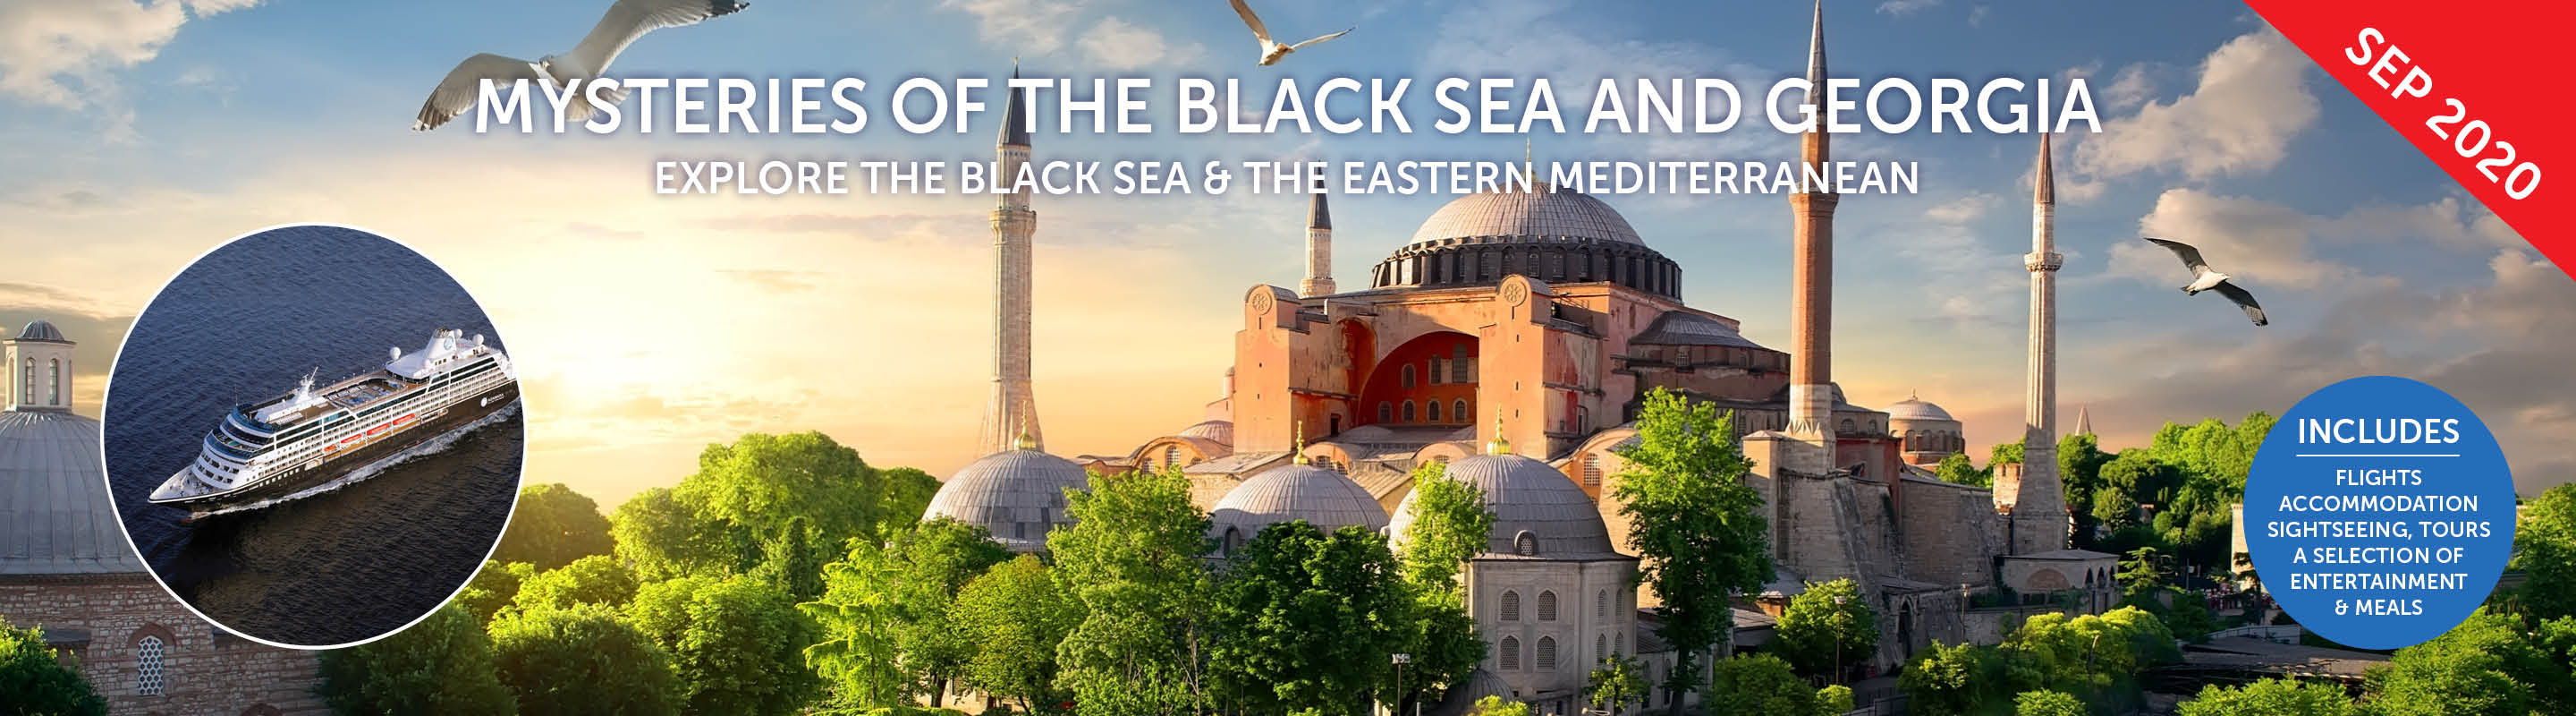 mysteries-black-sea-sep-2020-1.jpg